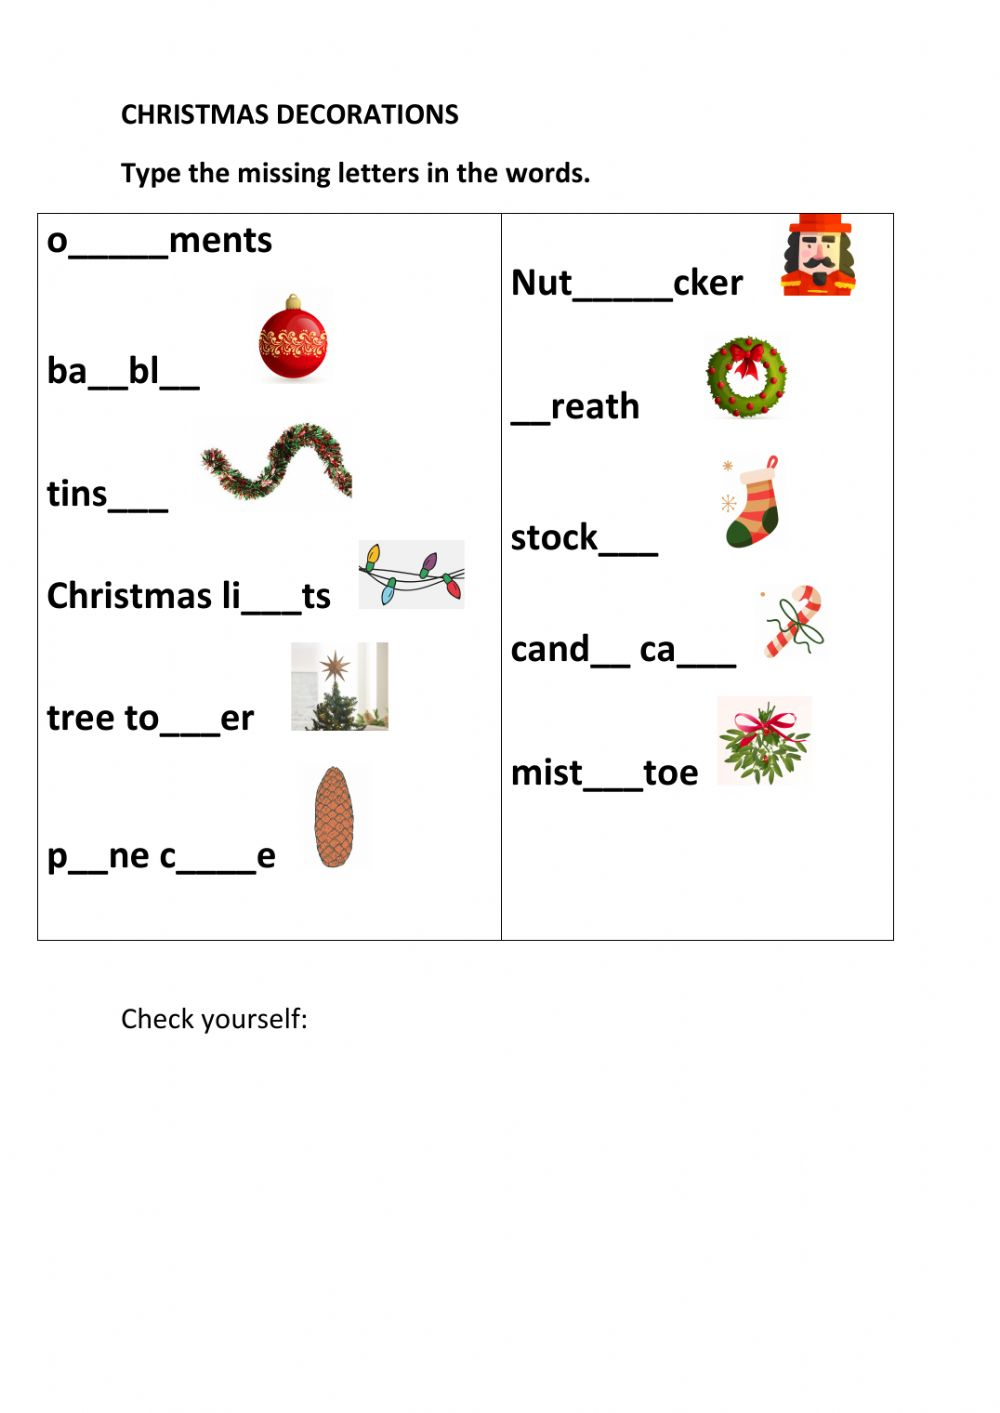 Christmas Decorations Interactive Worksheet